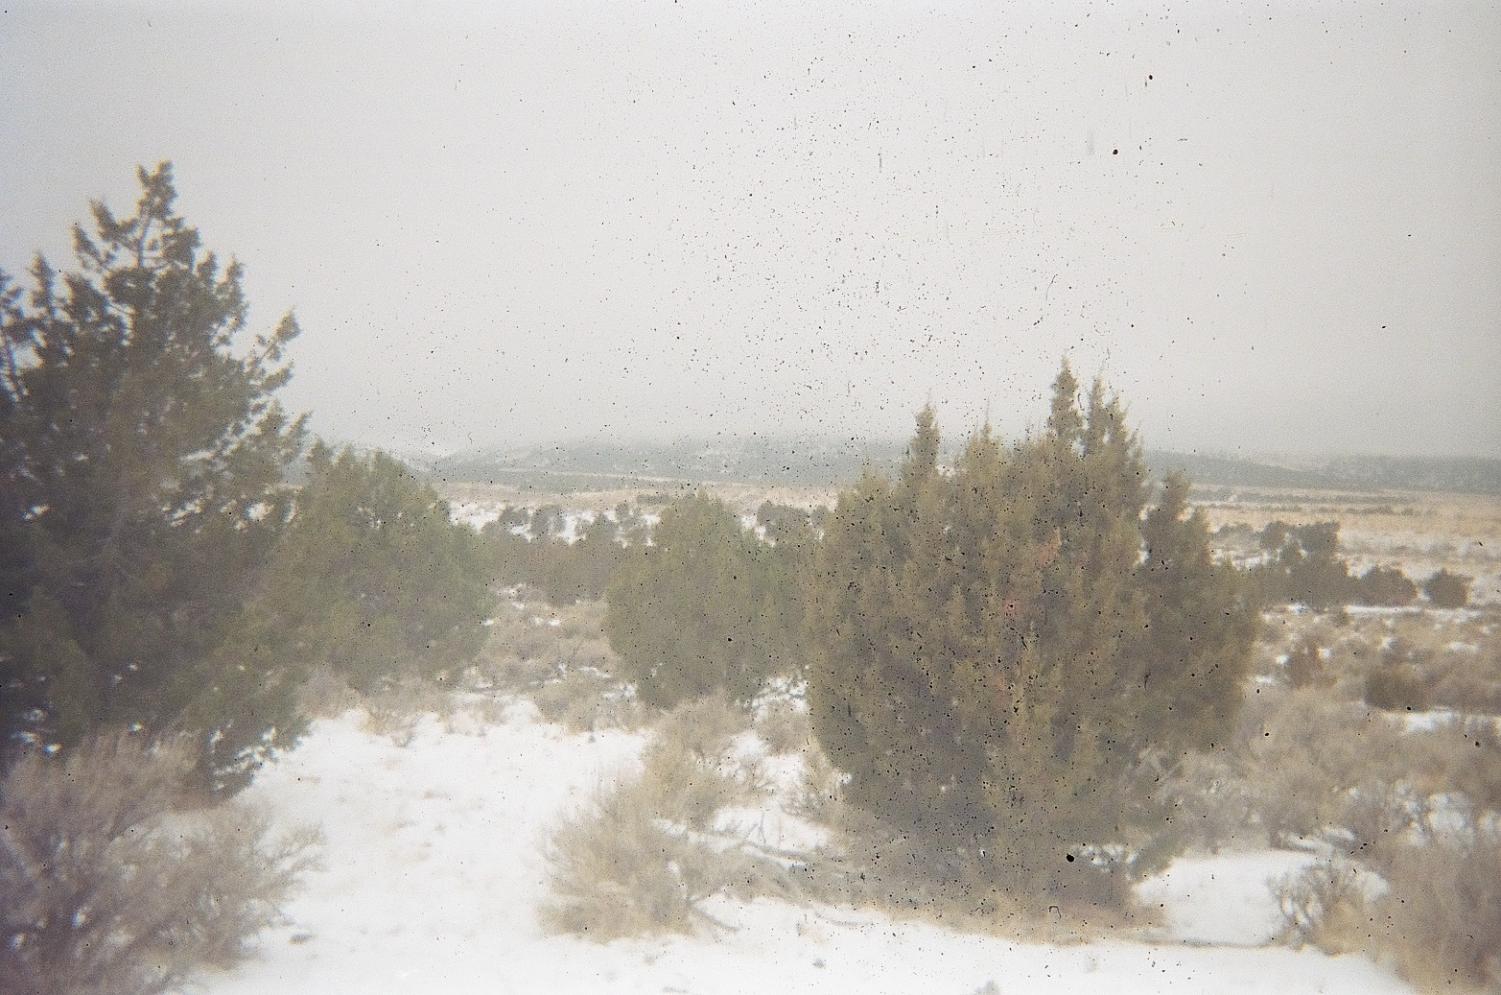 Film photo of trees against the barren winter landscape at the wilderness program in Utah.